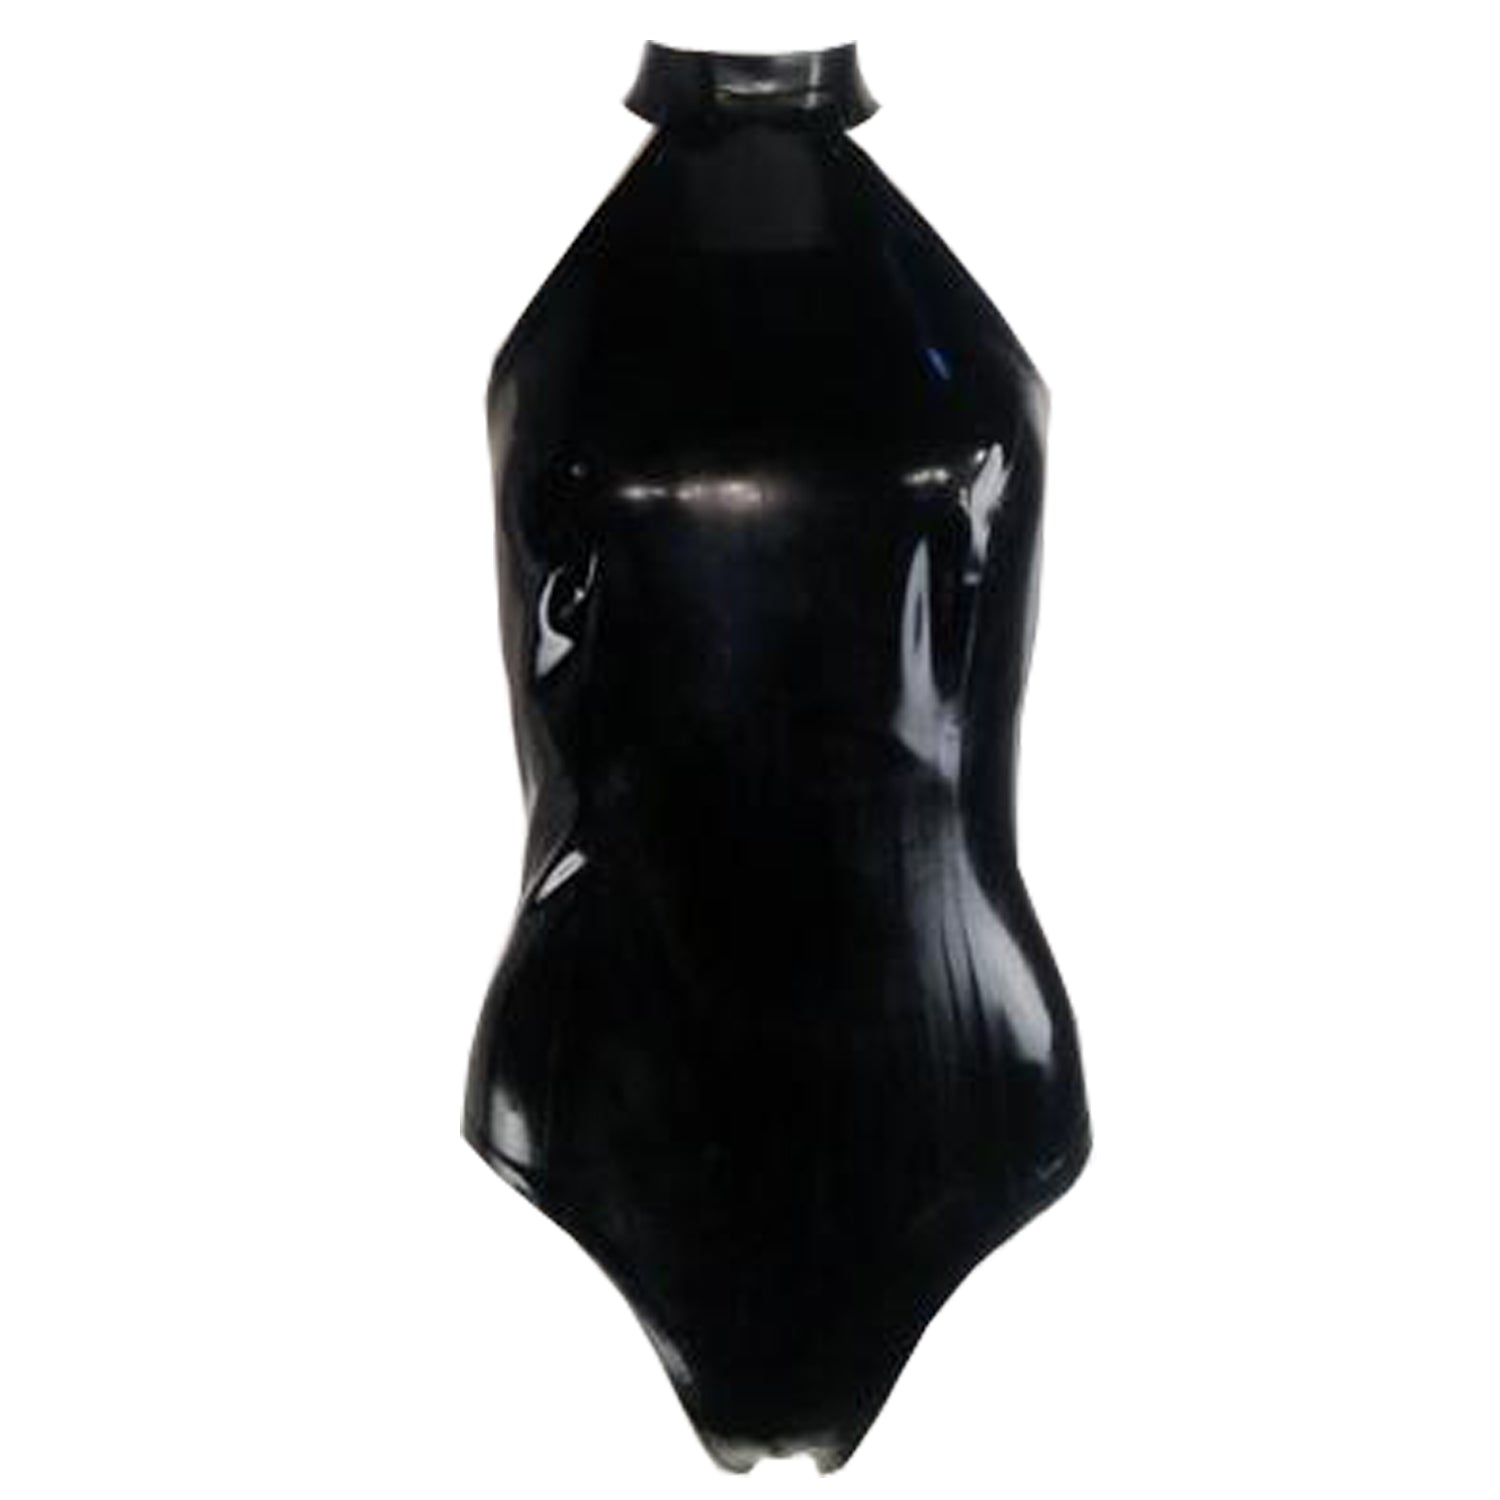 1X Halter Bodysuit READY TO SHIP 1X / Black  - Vex Inc. | Latex Clothing